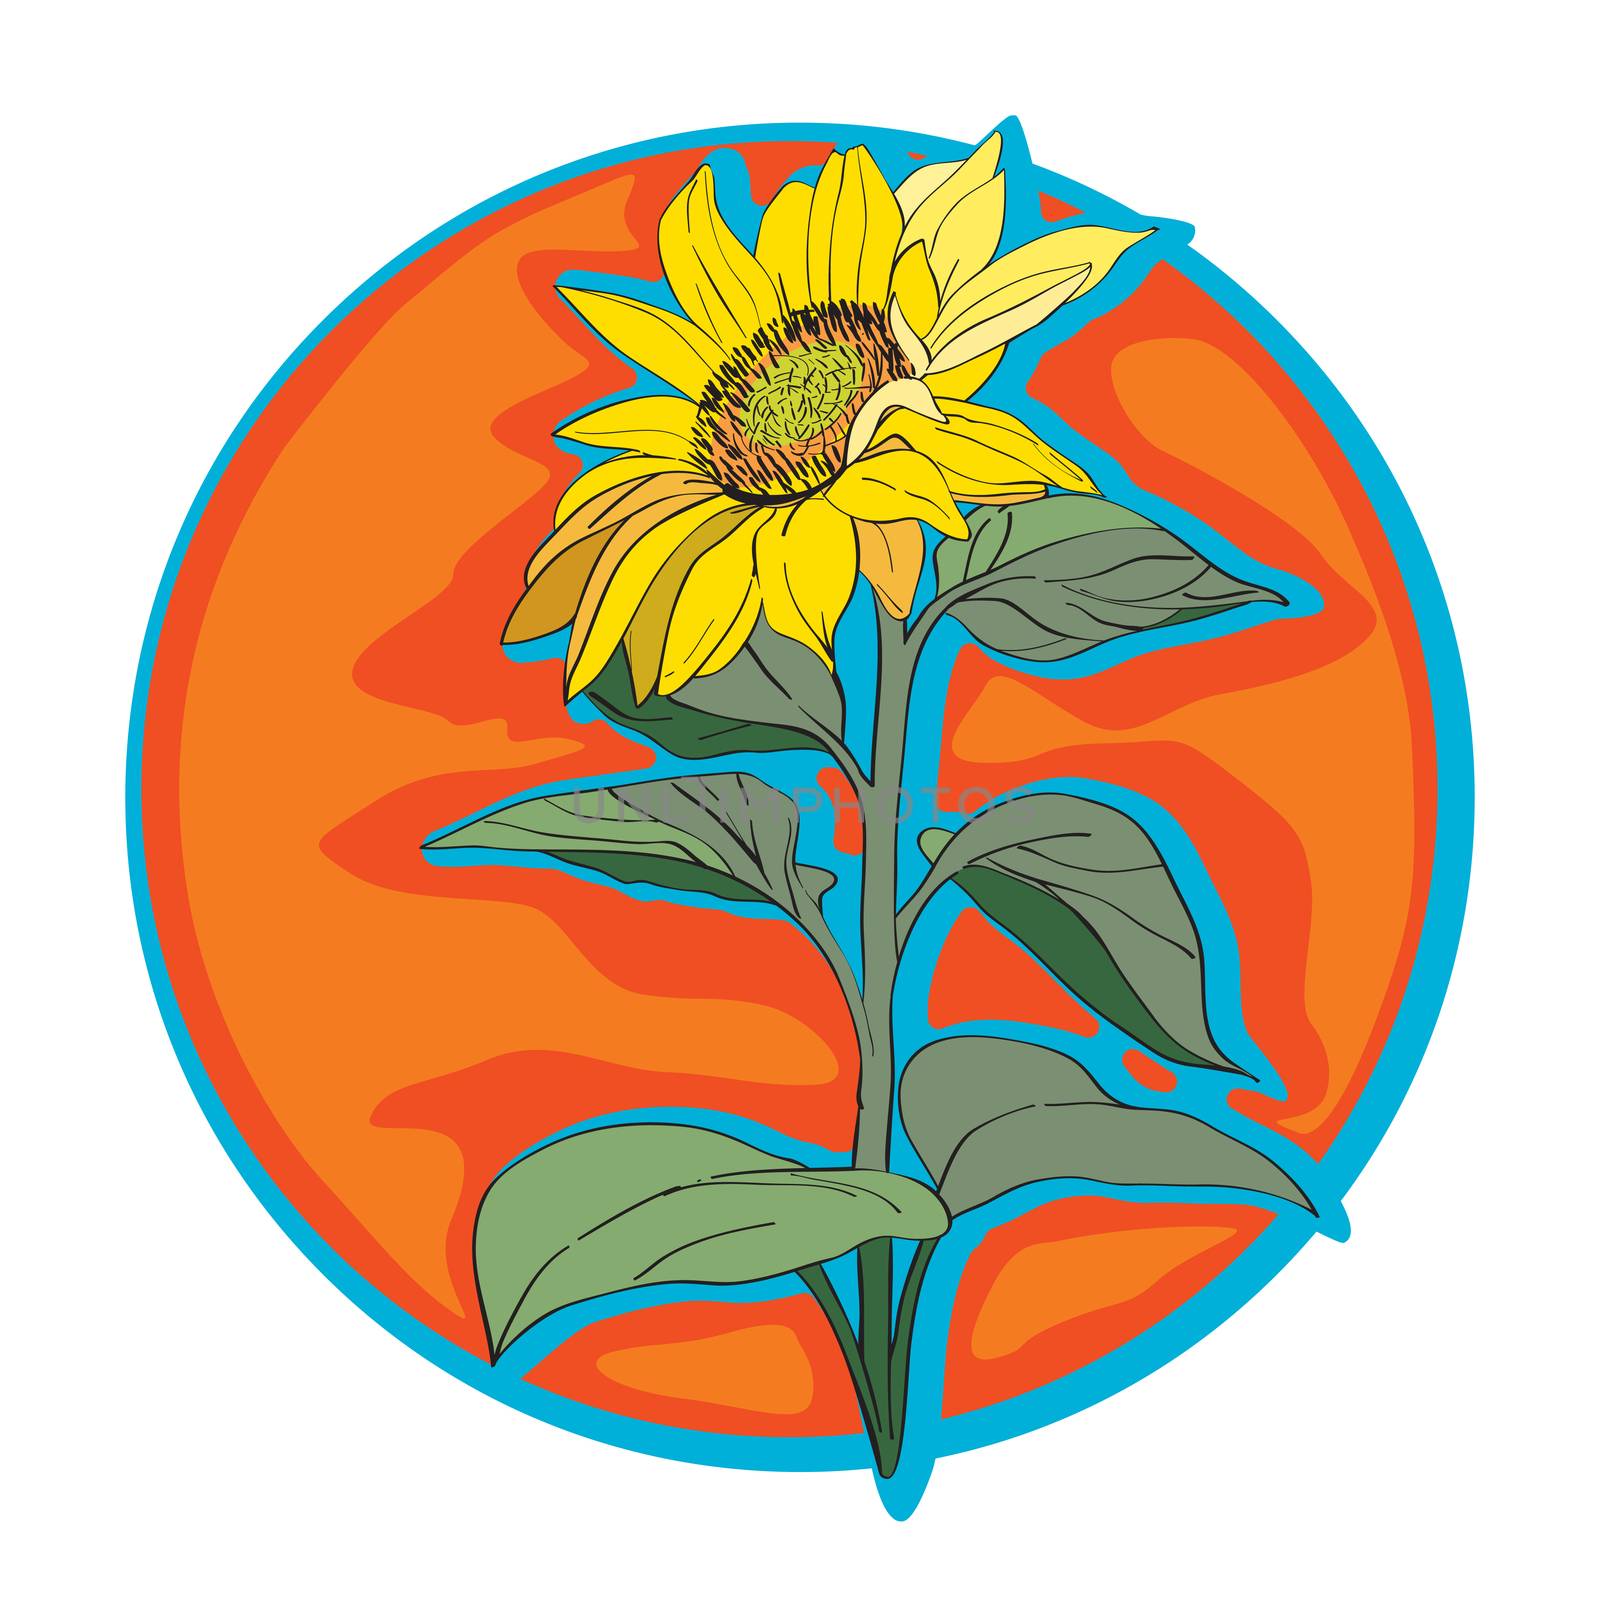 Sunflower clip art, hand drawn cartoon illustration isolated on white